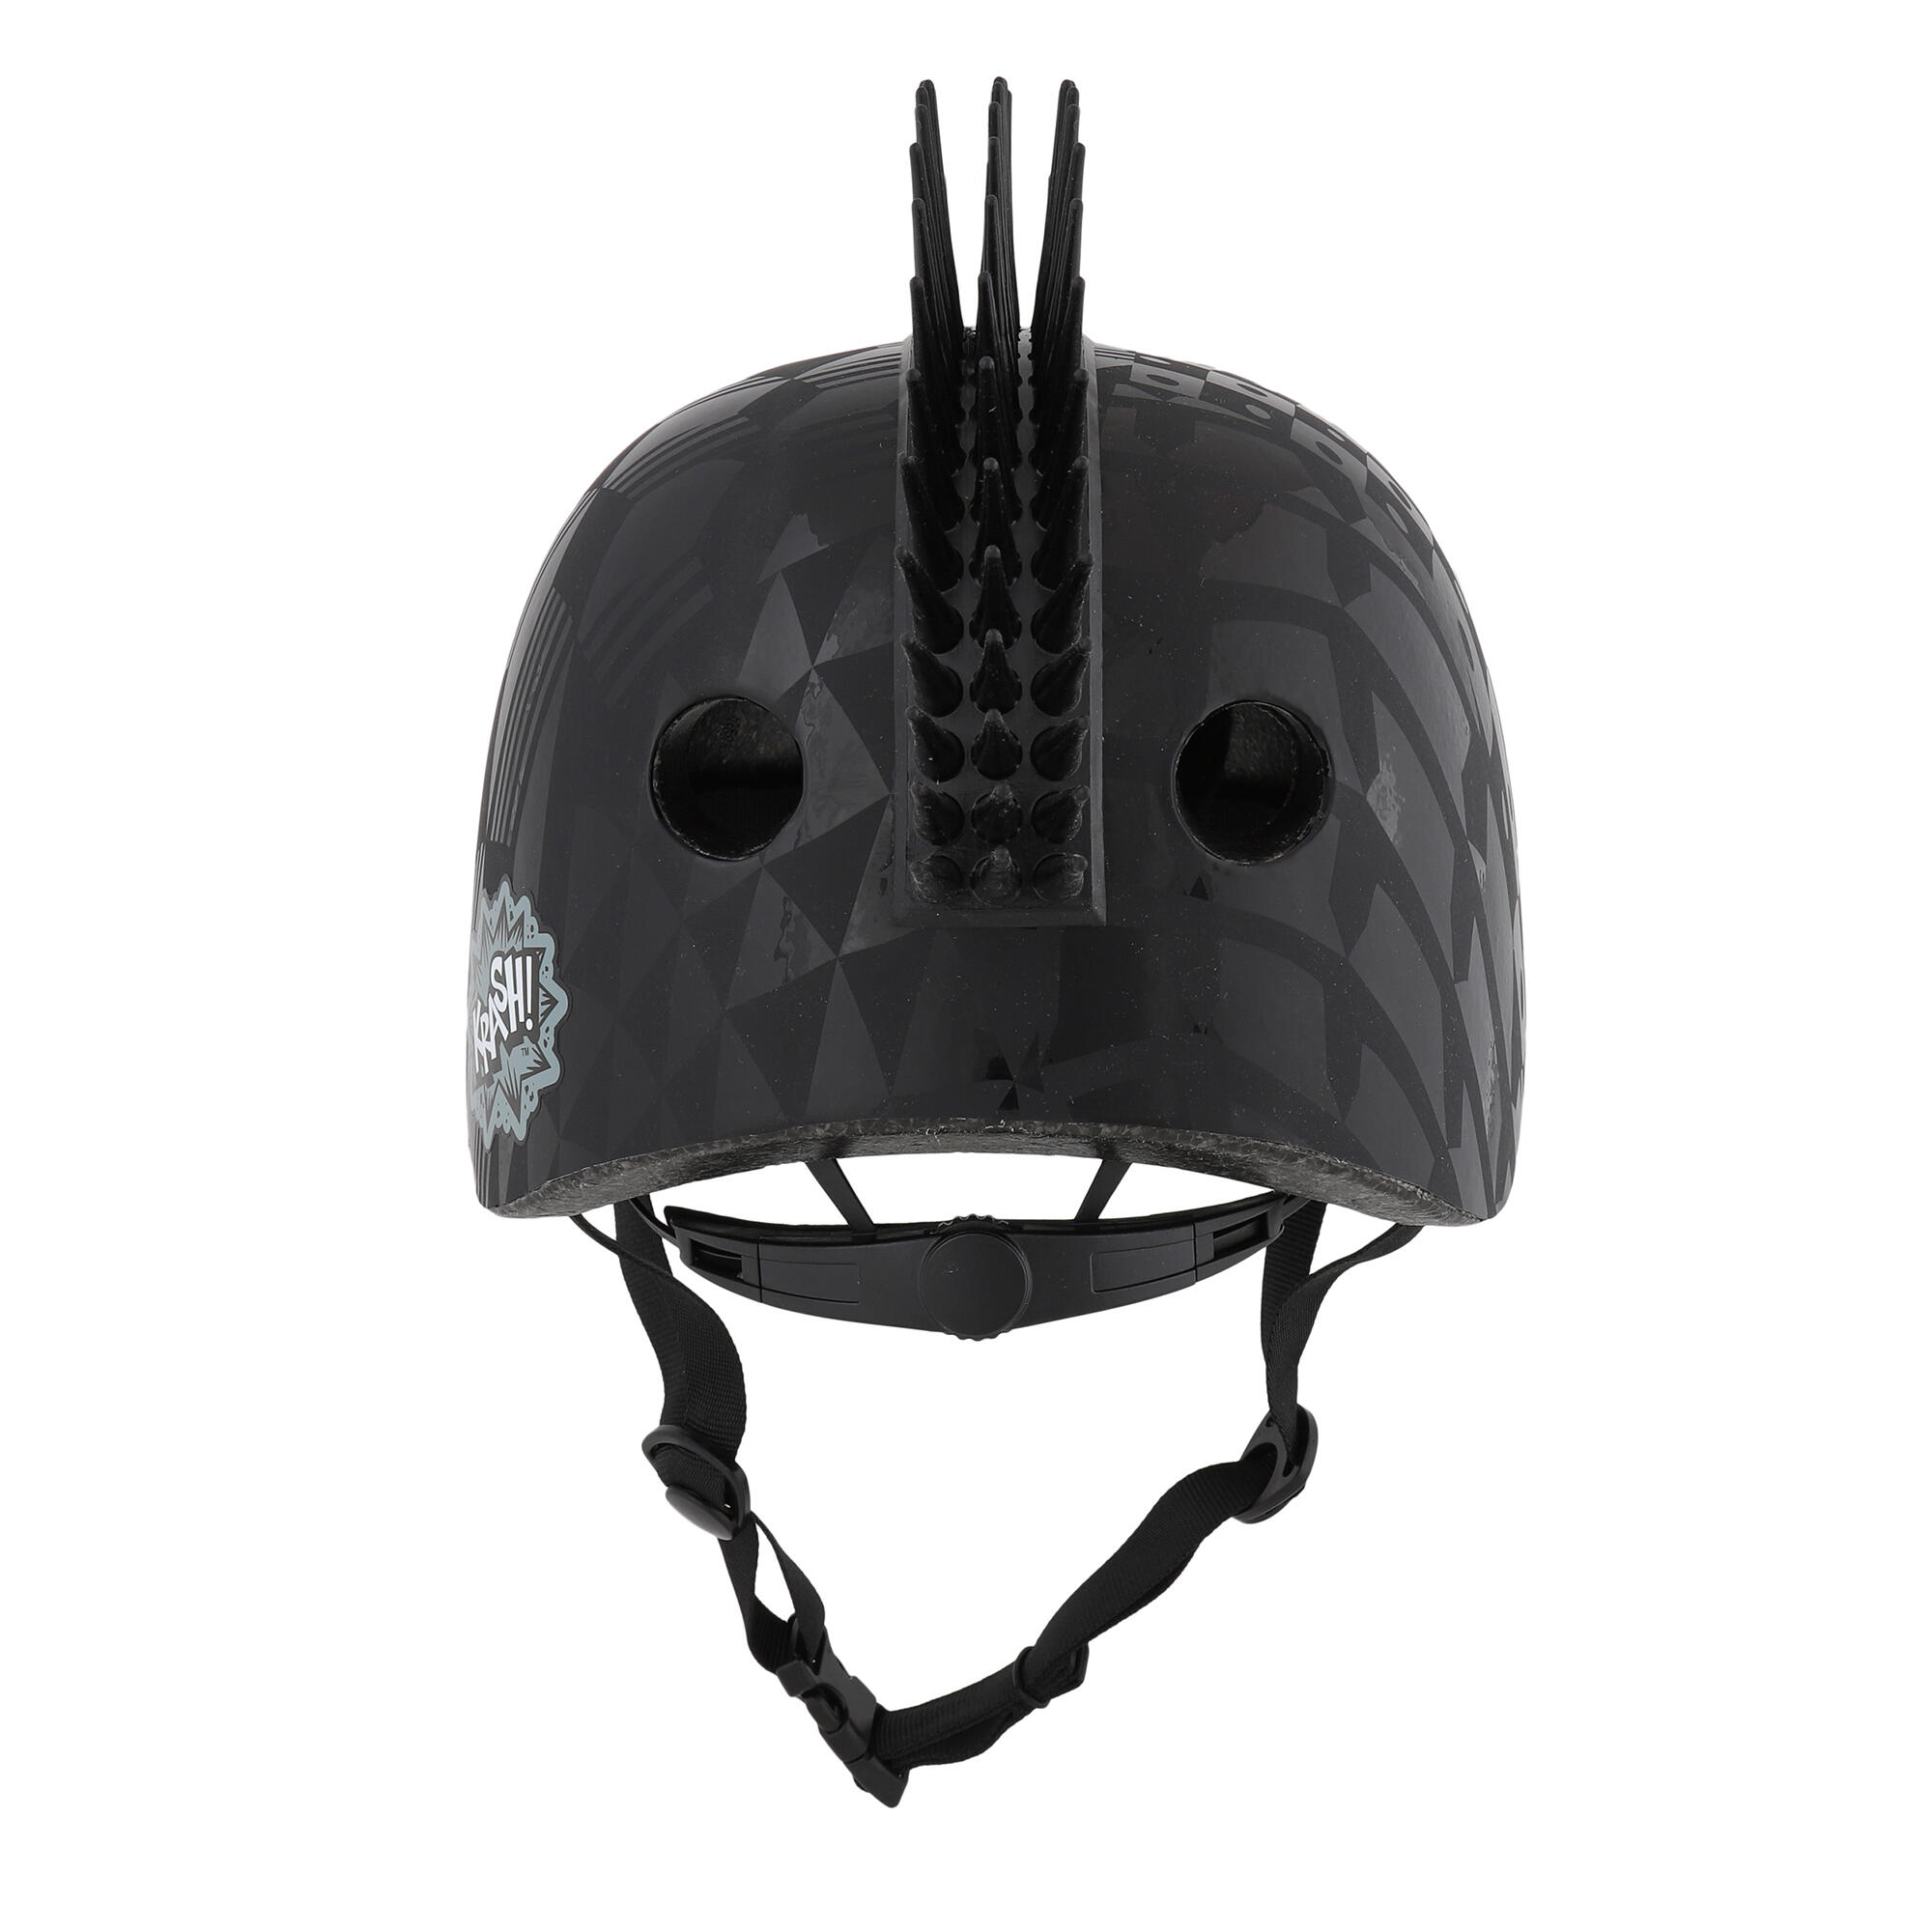 Krash FS Youth Helmet (8+) - Cube Hart Black Cube Hart Black Unisize 54-58cm 3/5